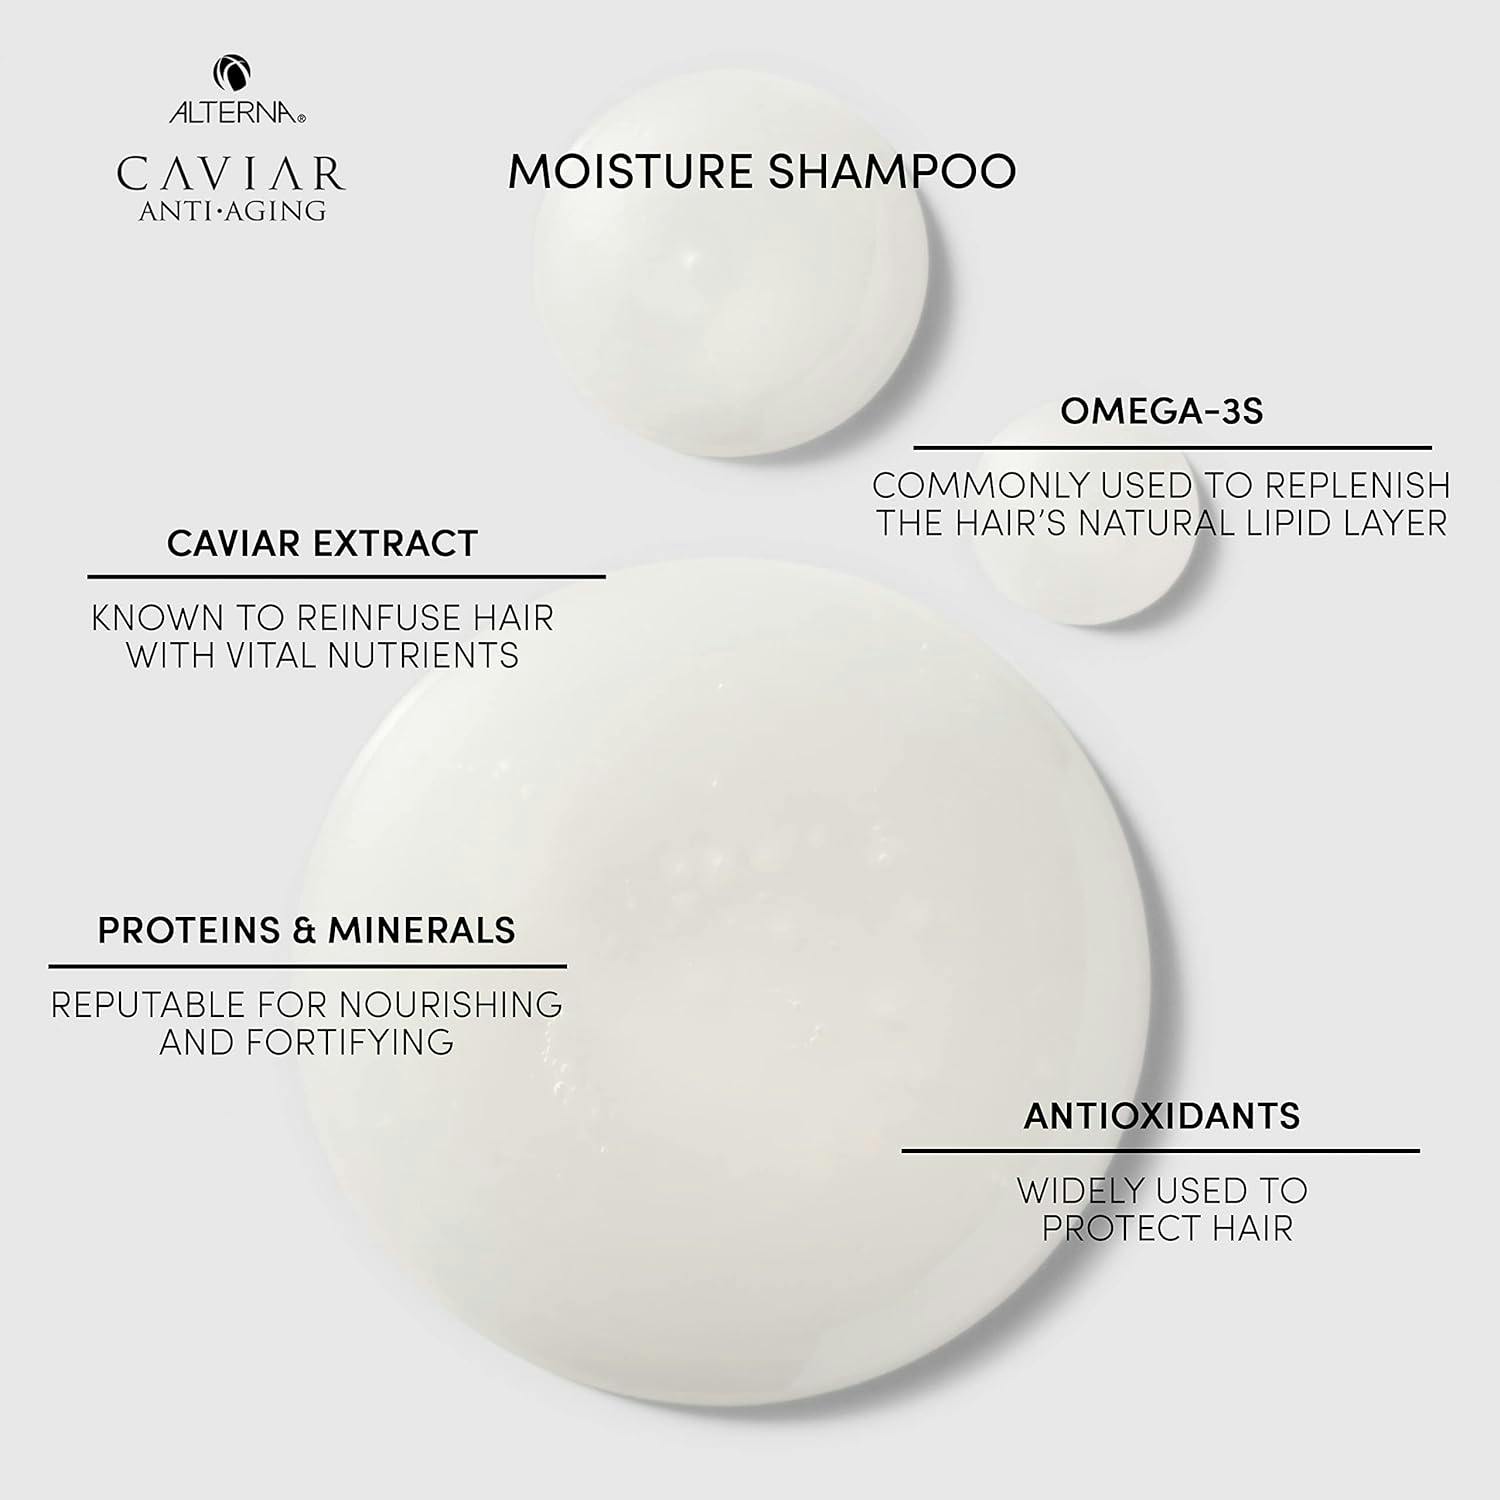 Alterna Caviar Replenishing Moisture Shampoo 488ml